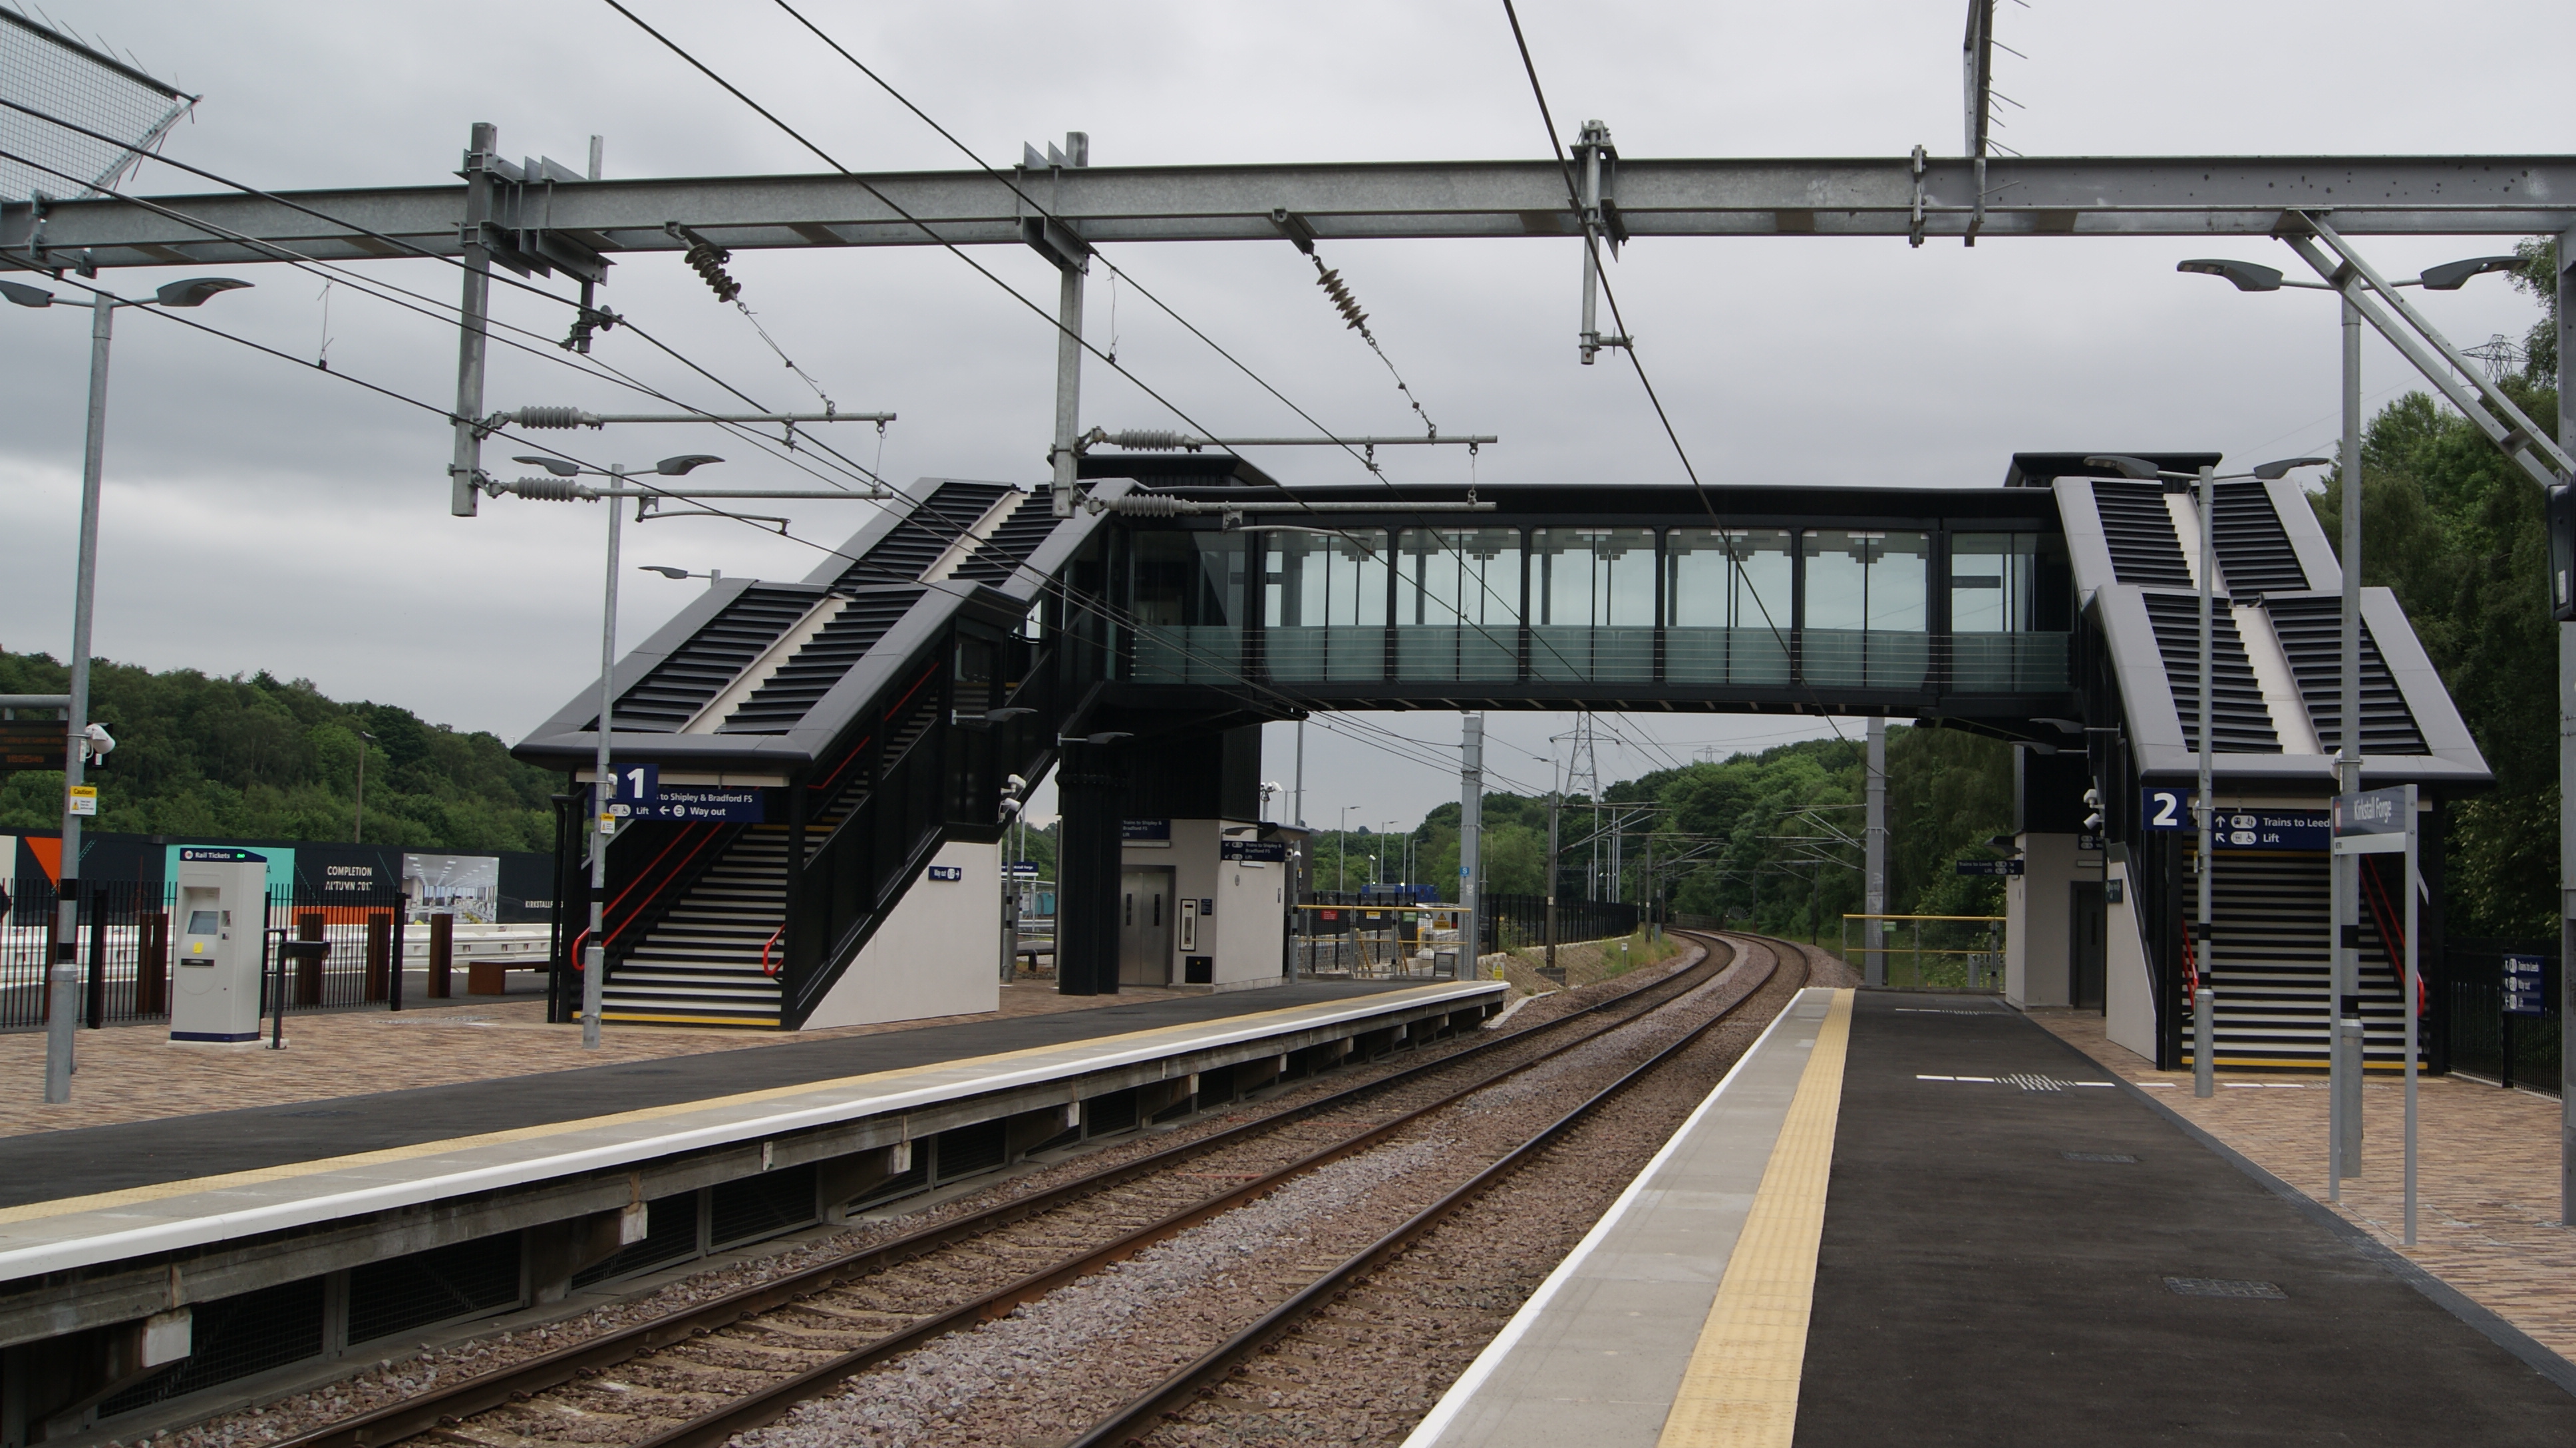 Kirkstall Forge railway station